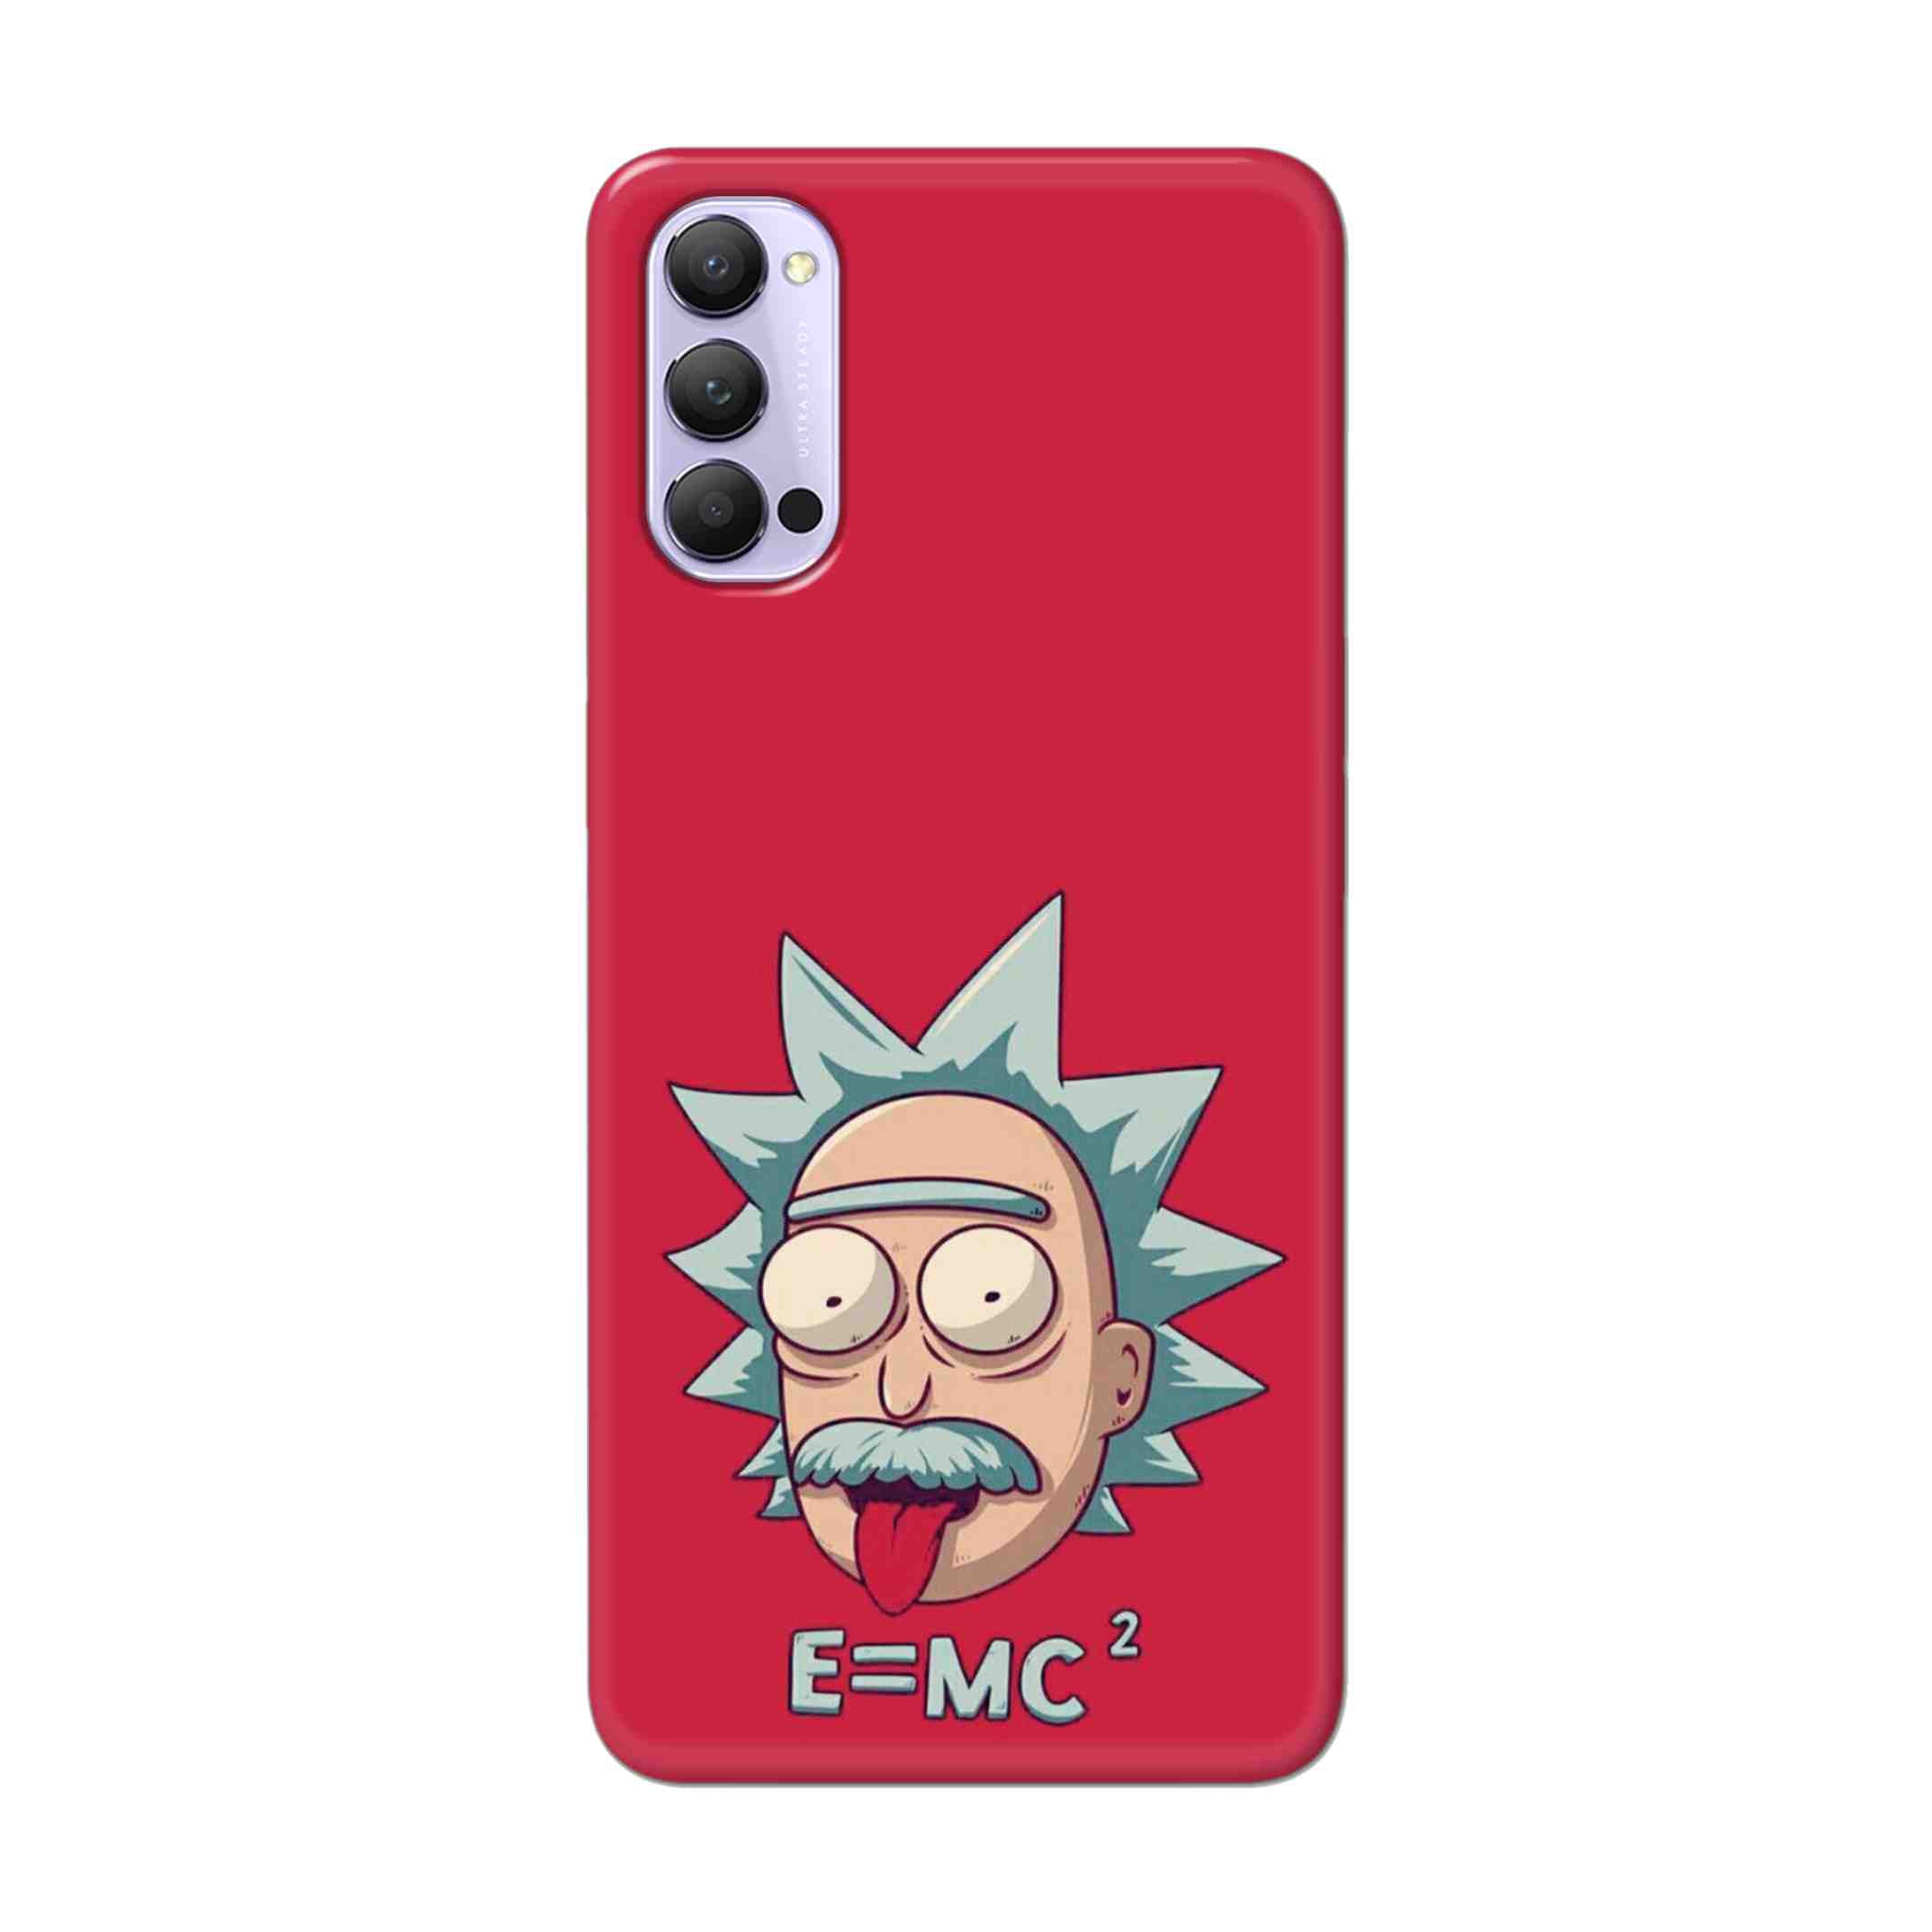 Buy E=Mc Hard Back Mobile Phone Case Cover For Oppo Reno 4 Pro Online